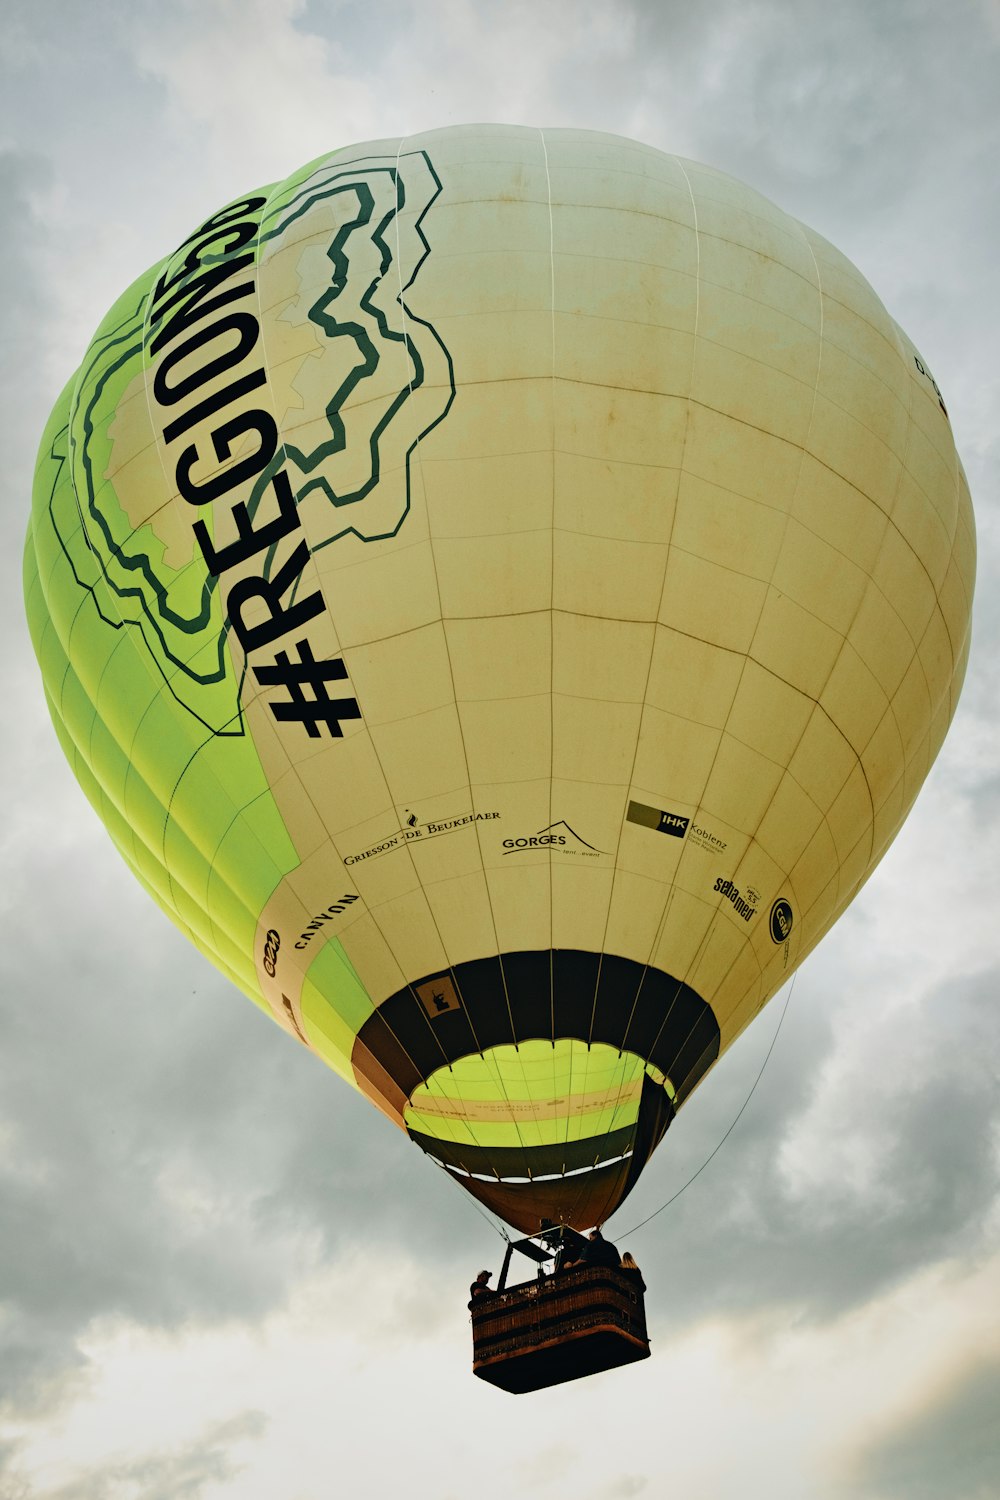 a large hot air balloon flying through a cloudy sky